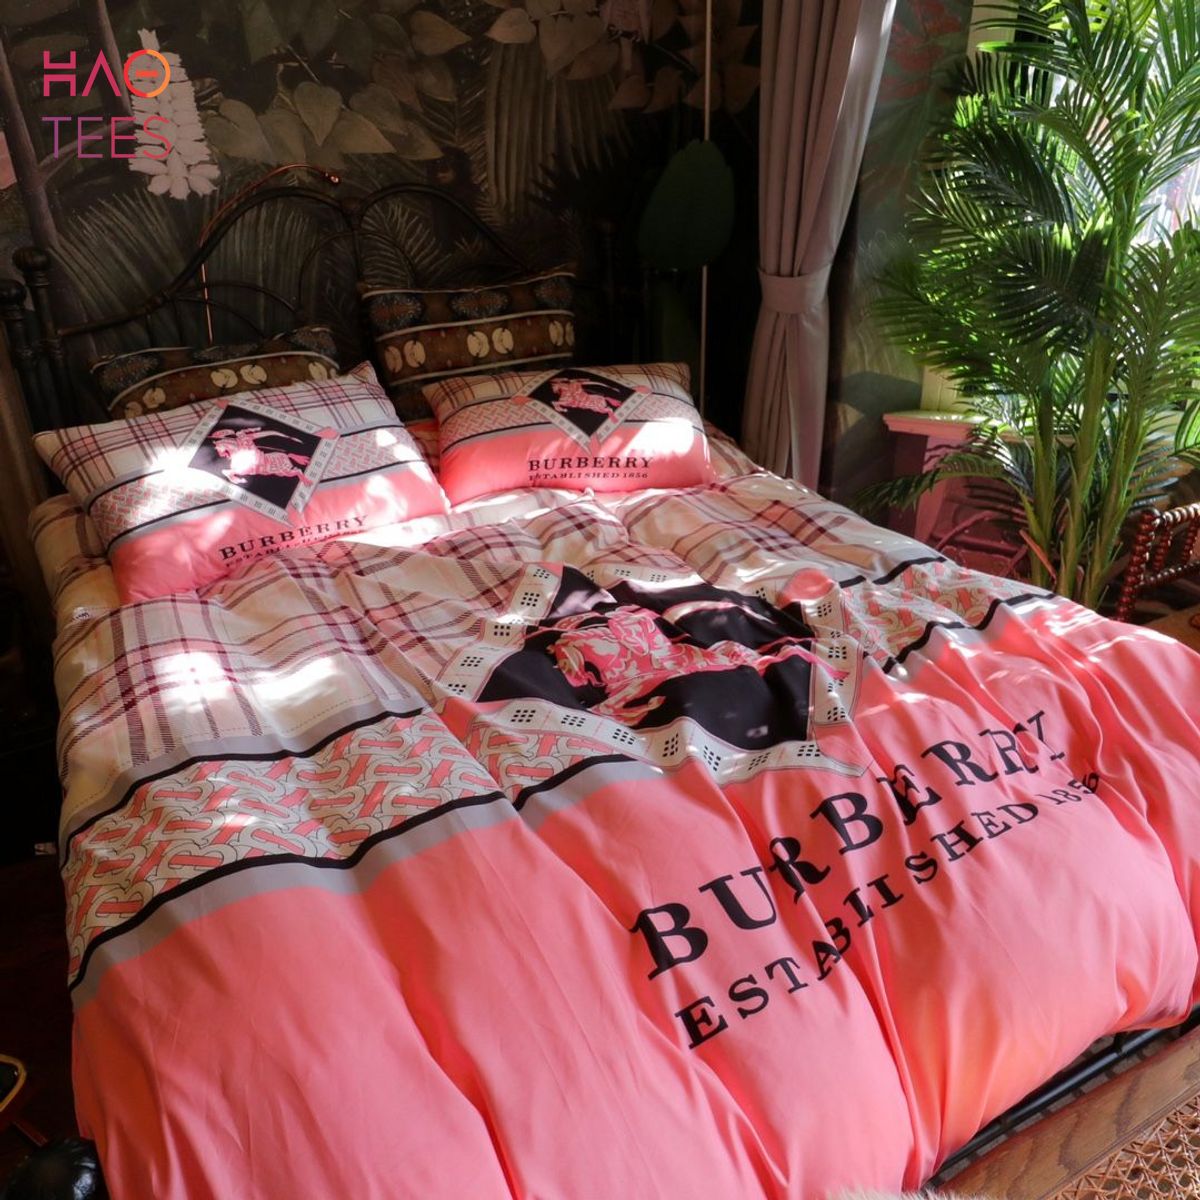 Burberry Pink Duvet Cover Luxury Brand Bedding Set